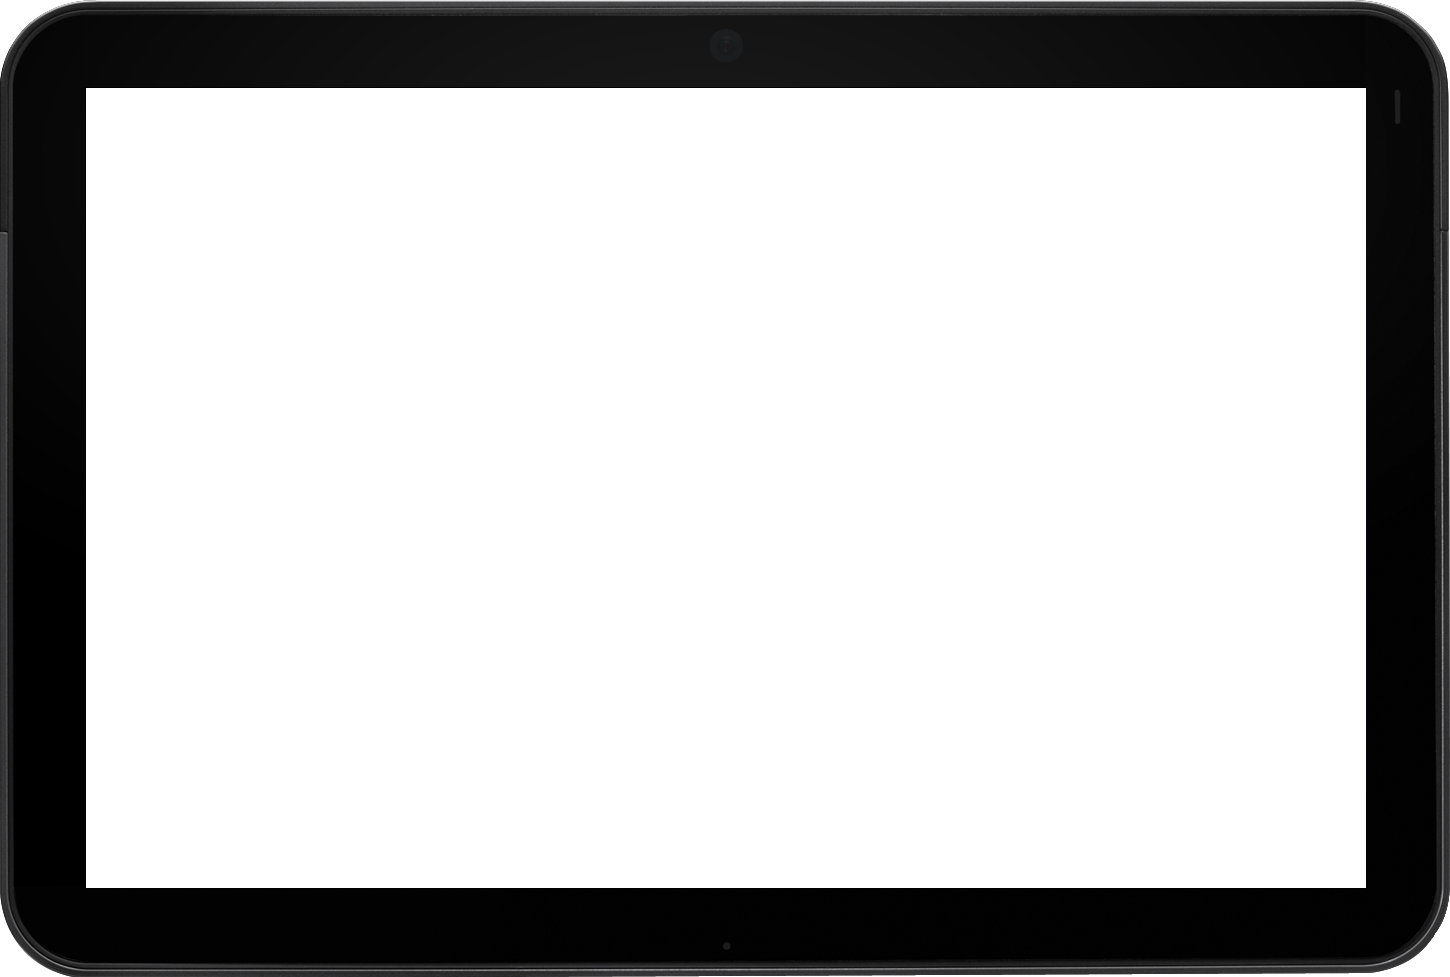 Transparent Tablet Png Image - Tablet, Transparent background PNG HD thumbnail